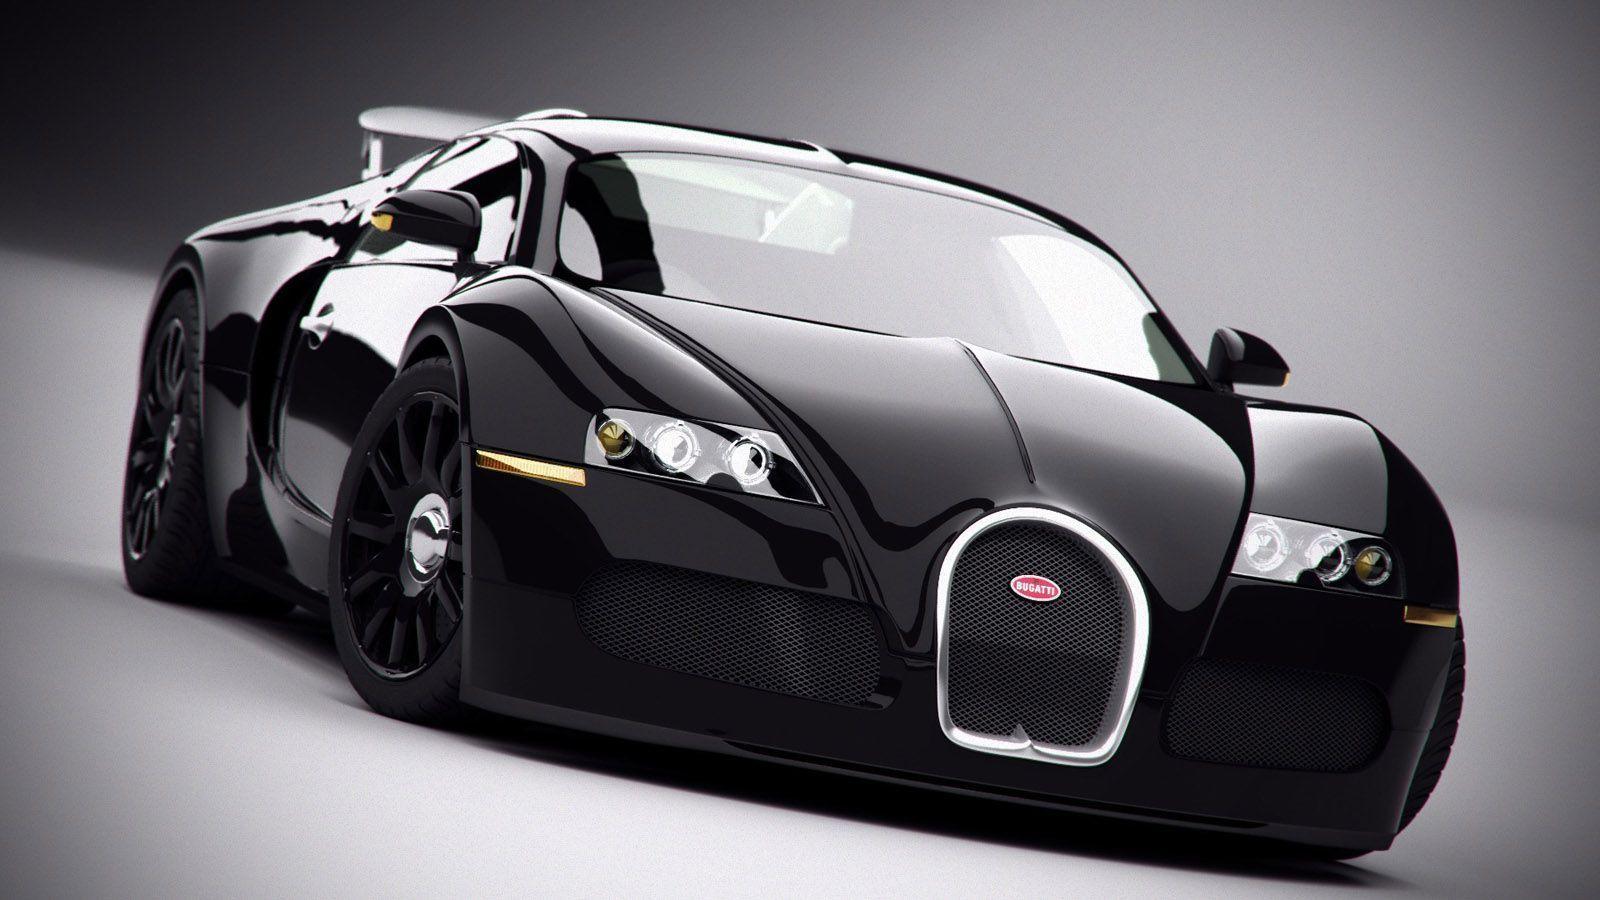 FunMozar – Bugatti Veyron Super Sports Cars